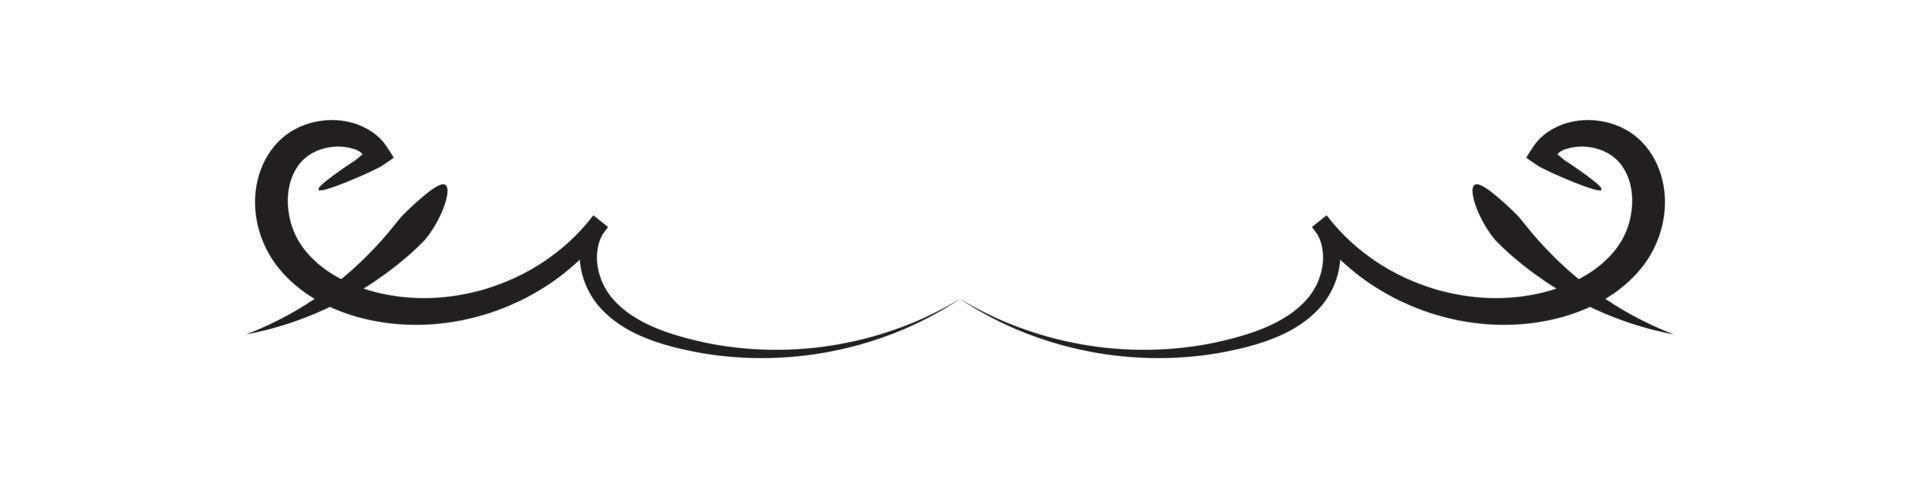 divisor aislado en blanco antecedentes. minimalista divisor. vector ilustración